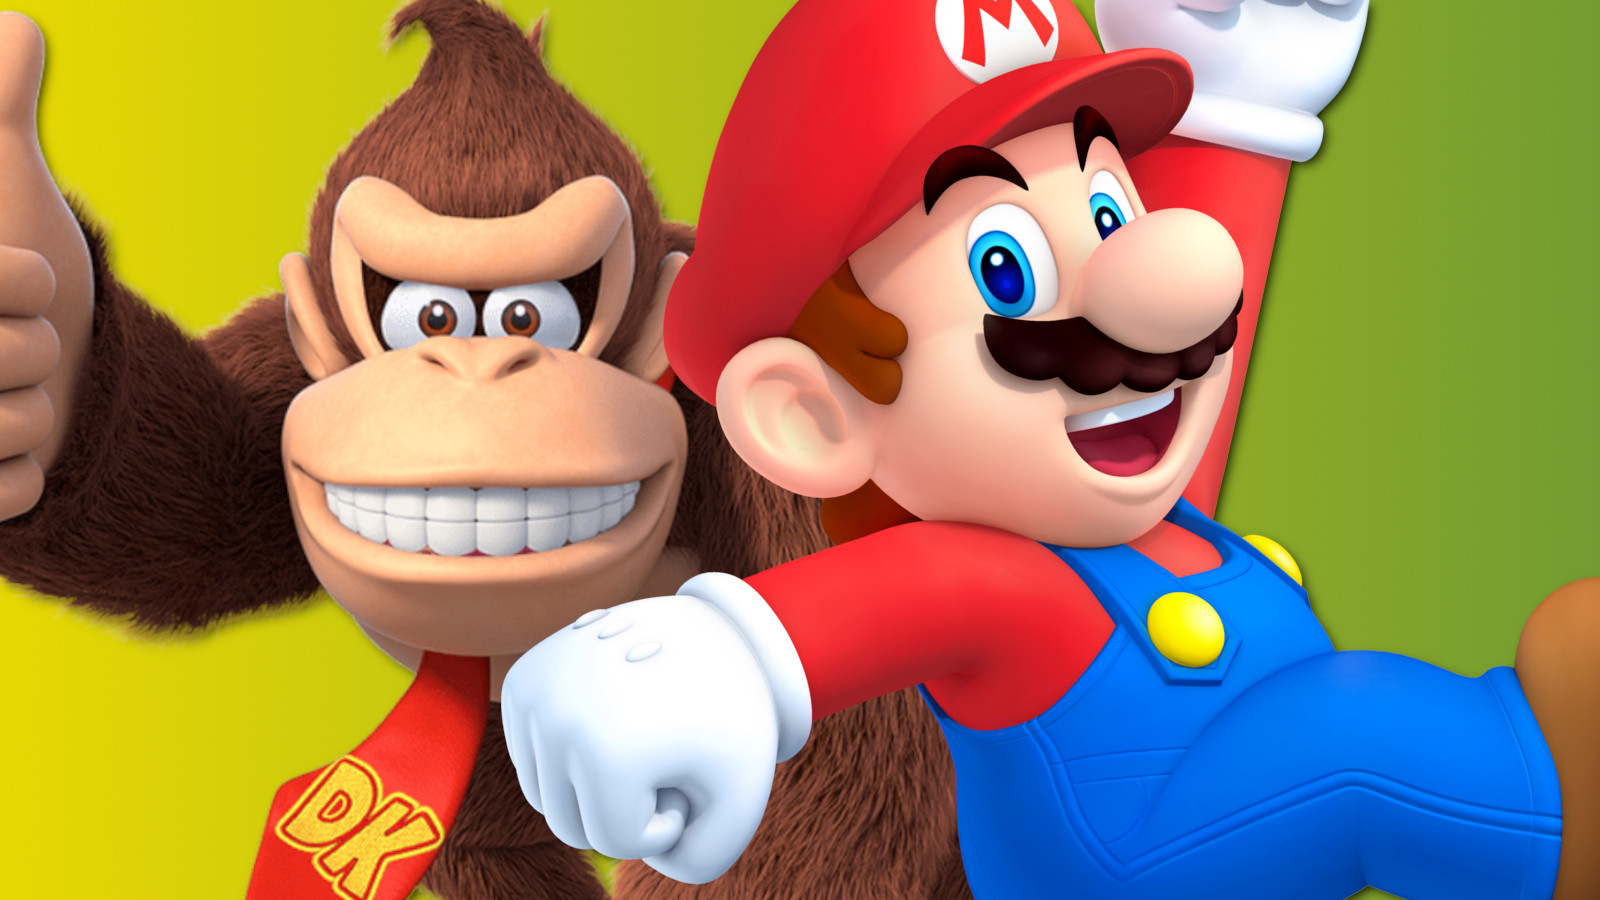 Donkey Kong and Mario together